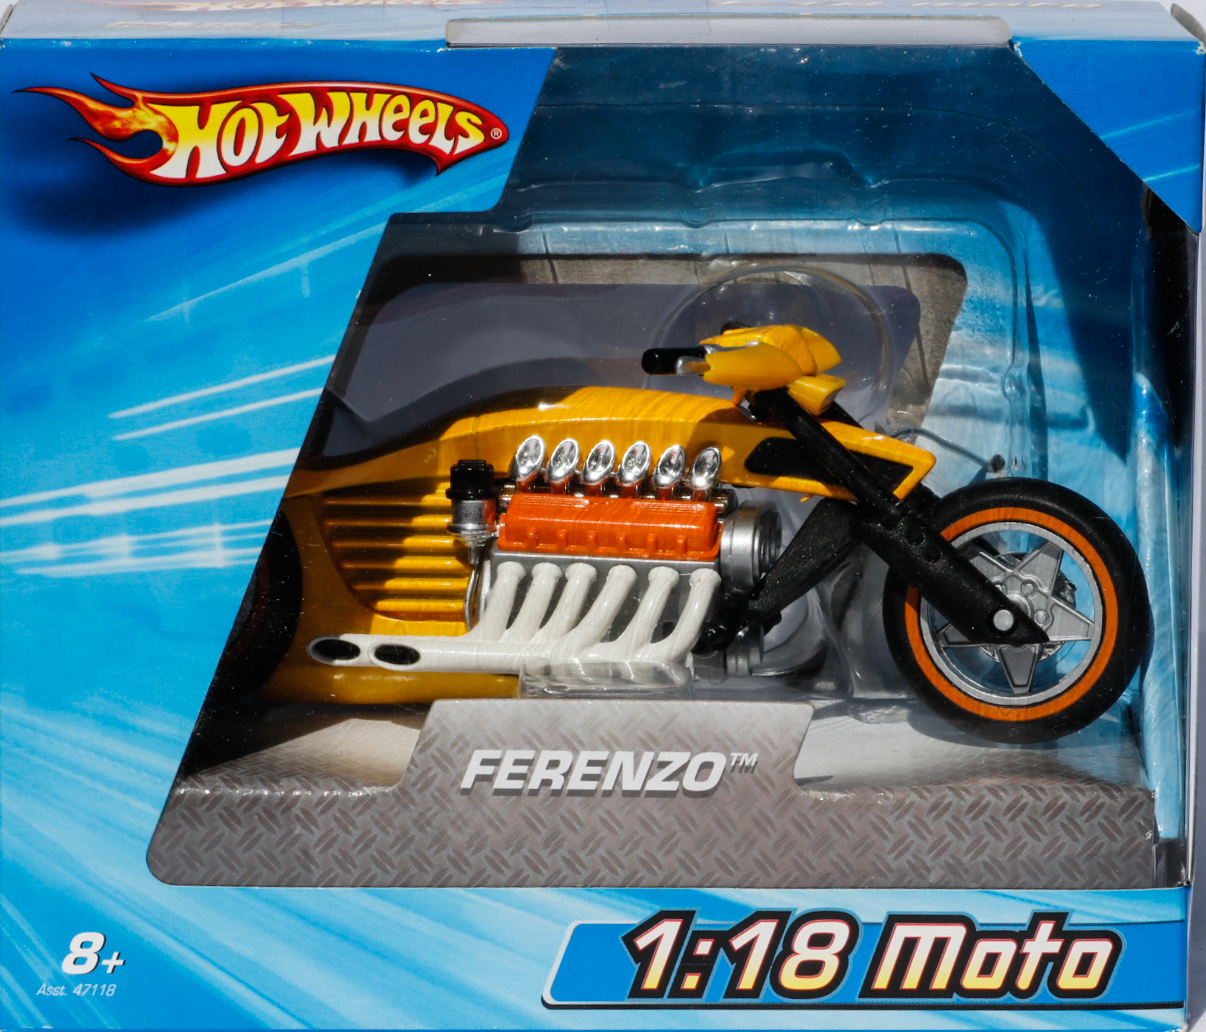 Hot Wheels 1-18 Moto Ferenzo